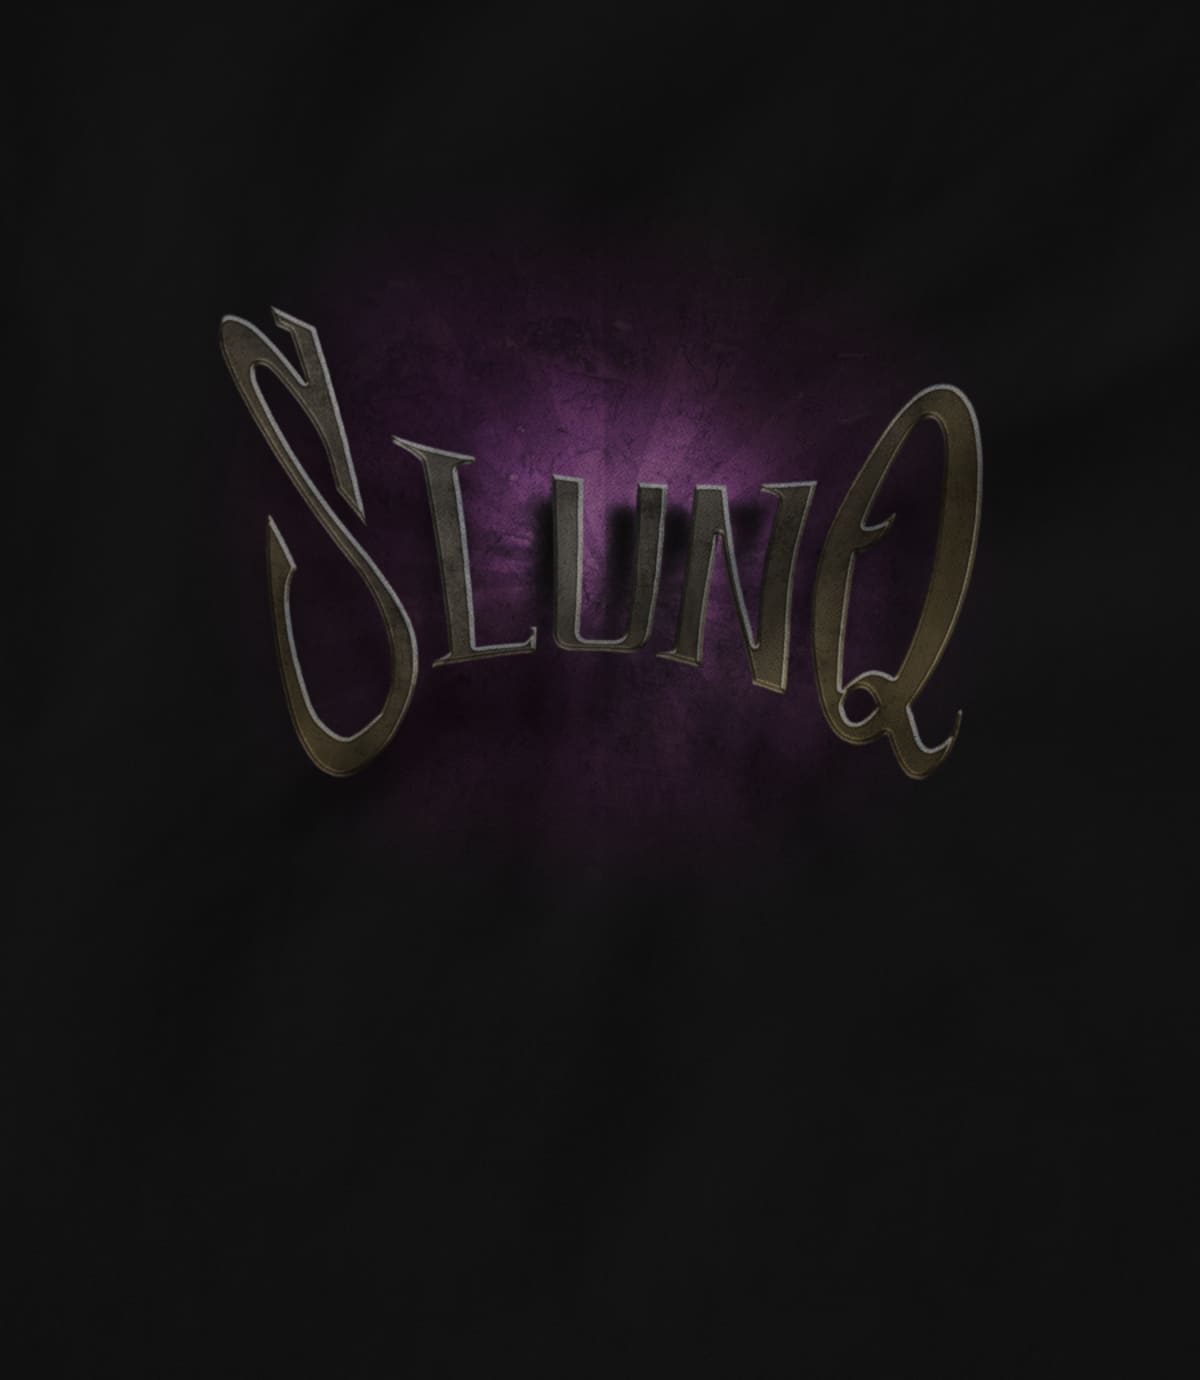 Slunq logo pink 1570411432